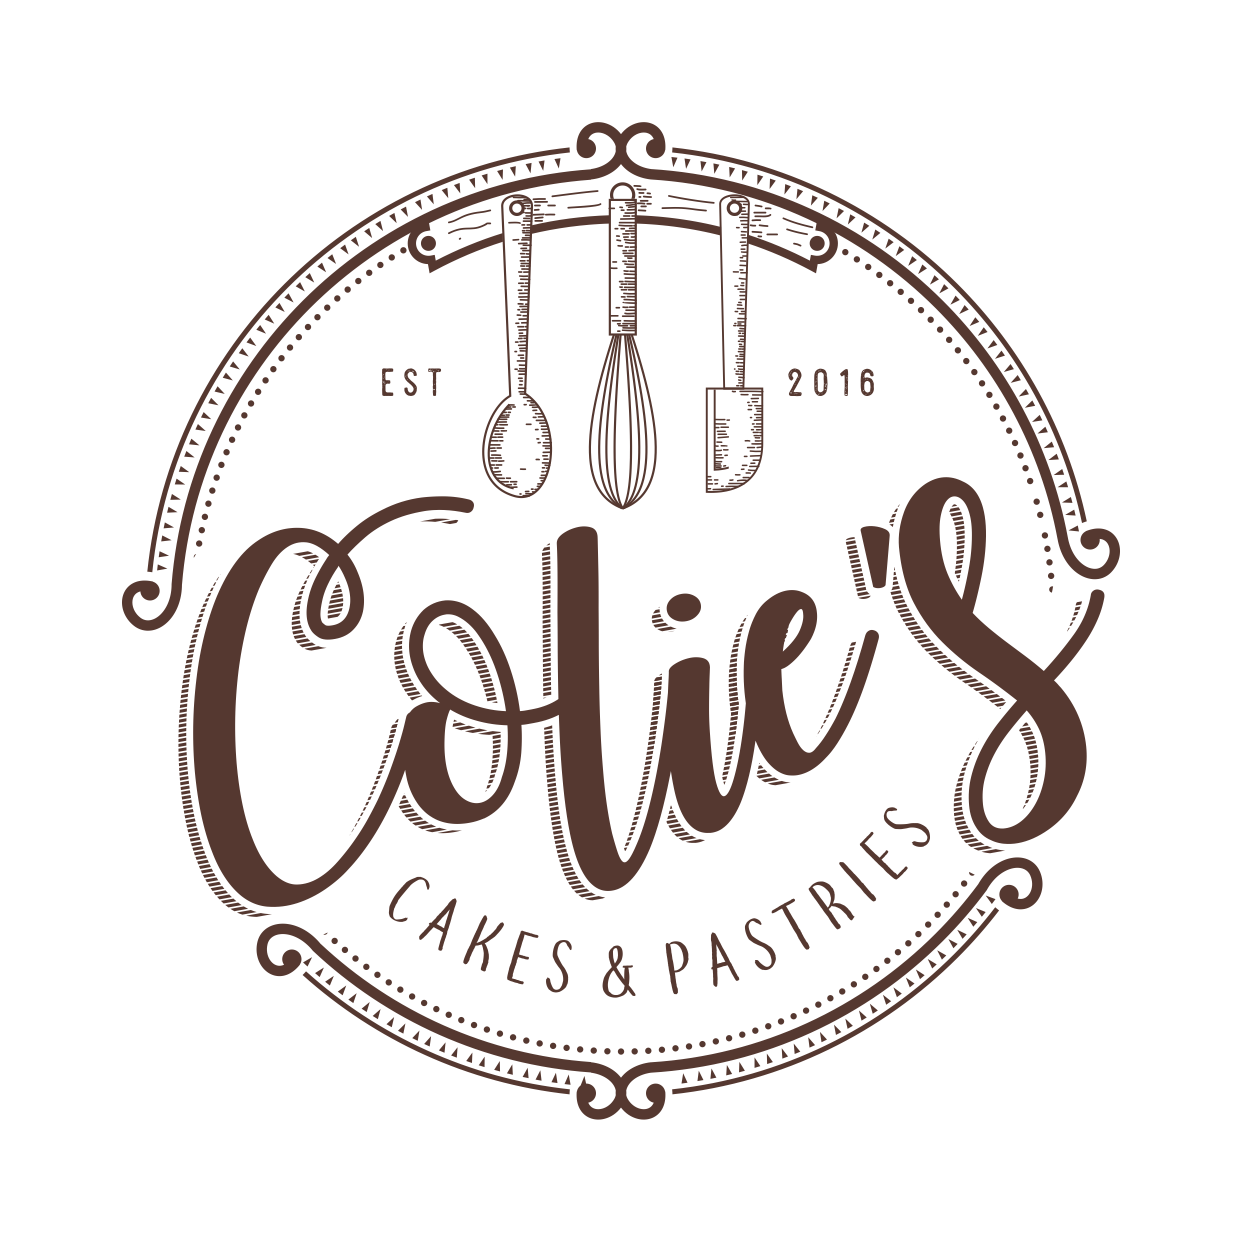 Colie's Cakes & Pastries, LLC